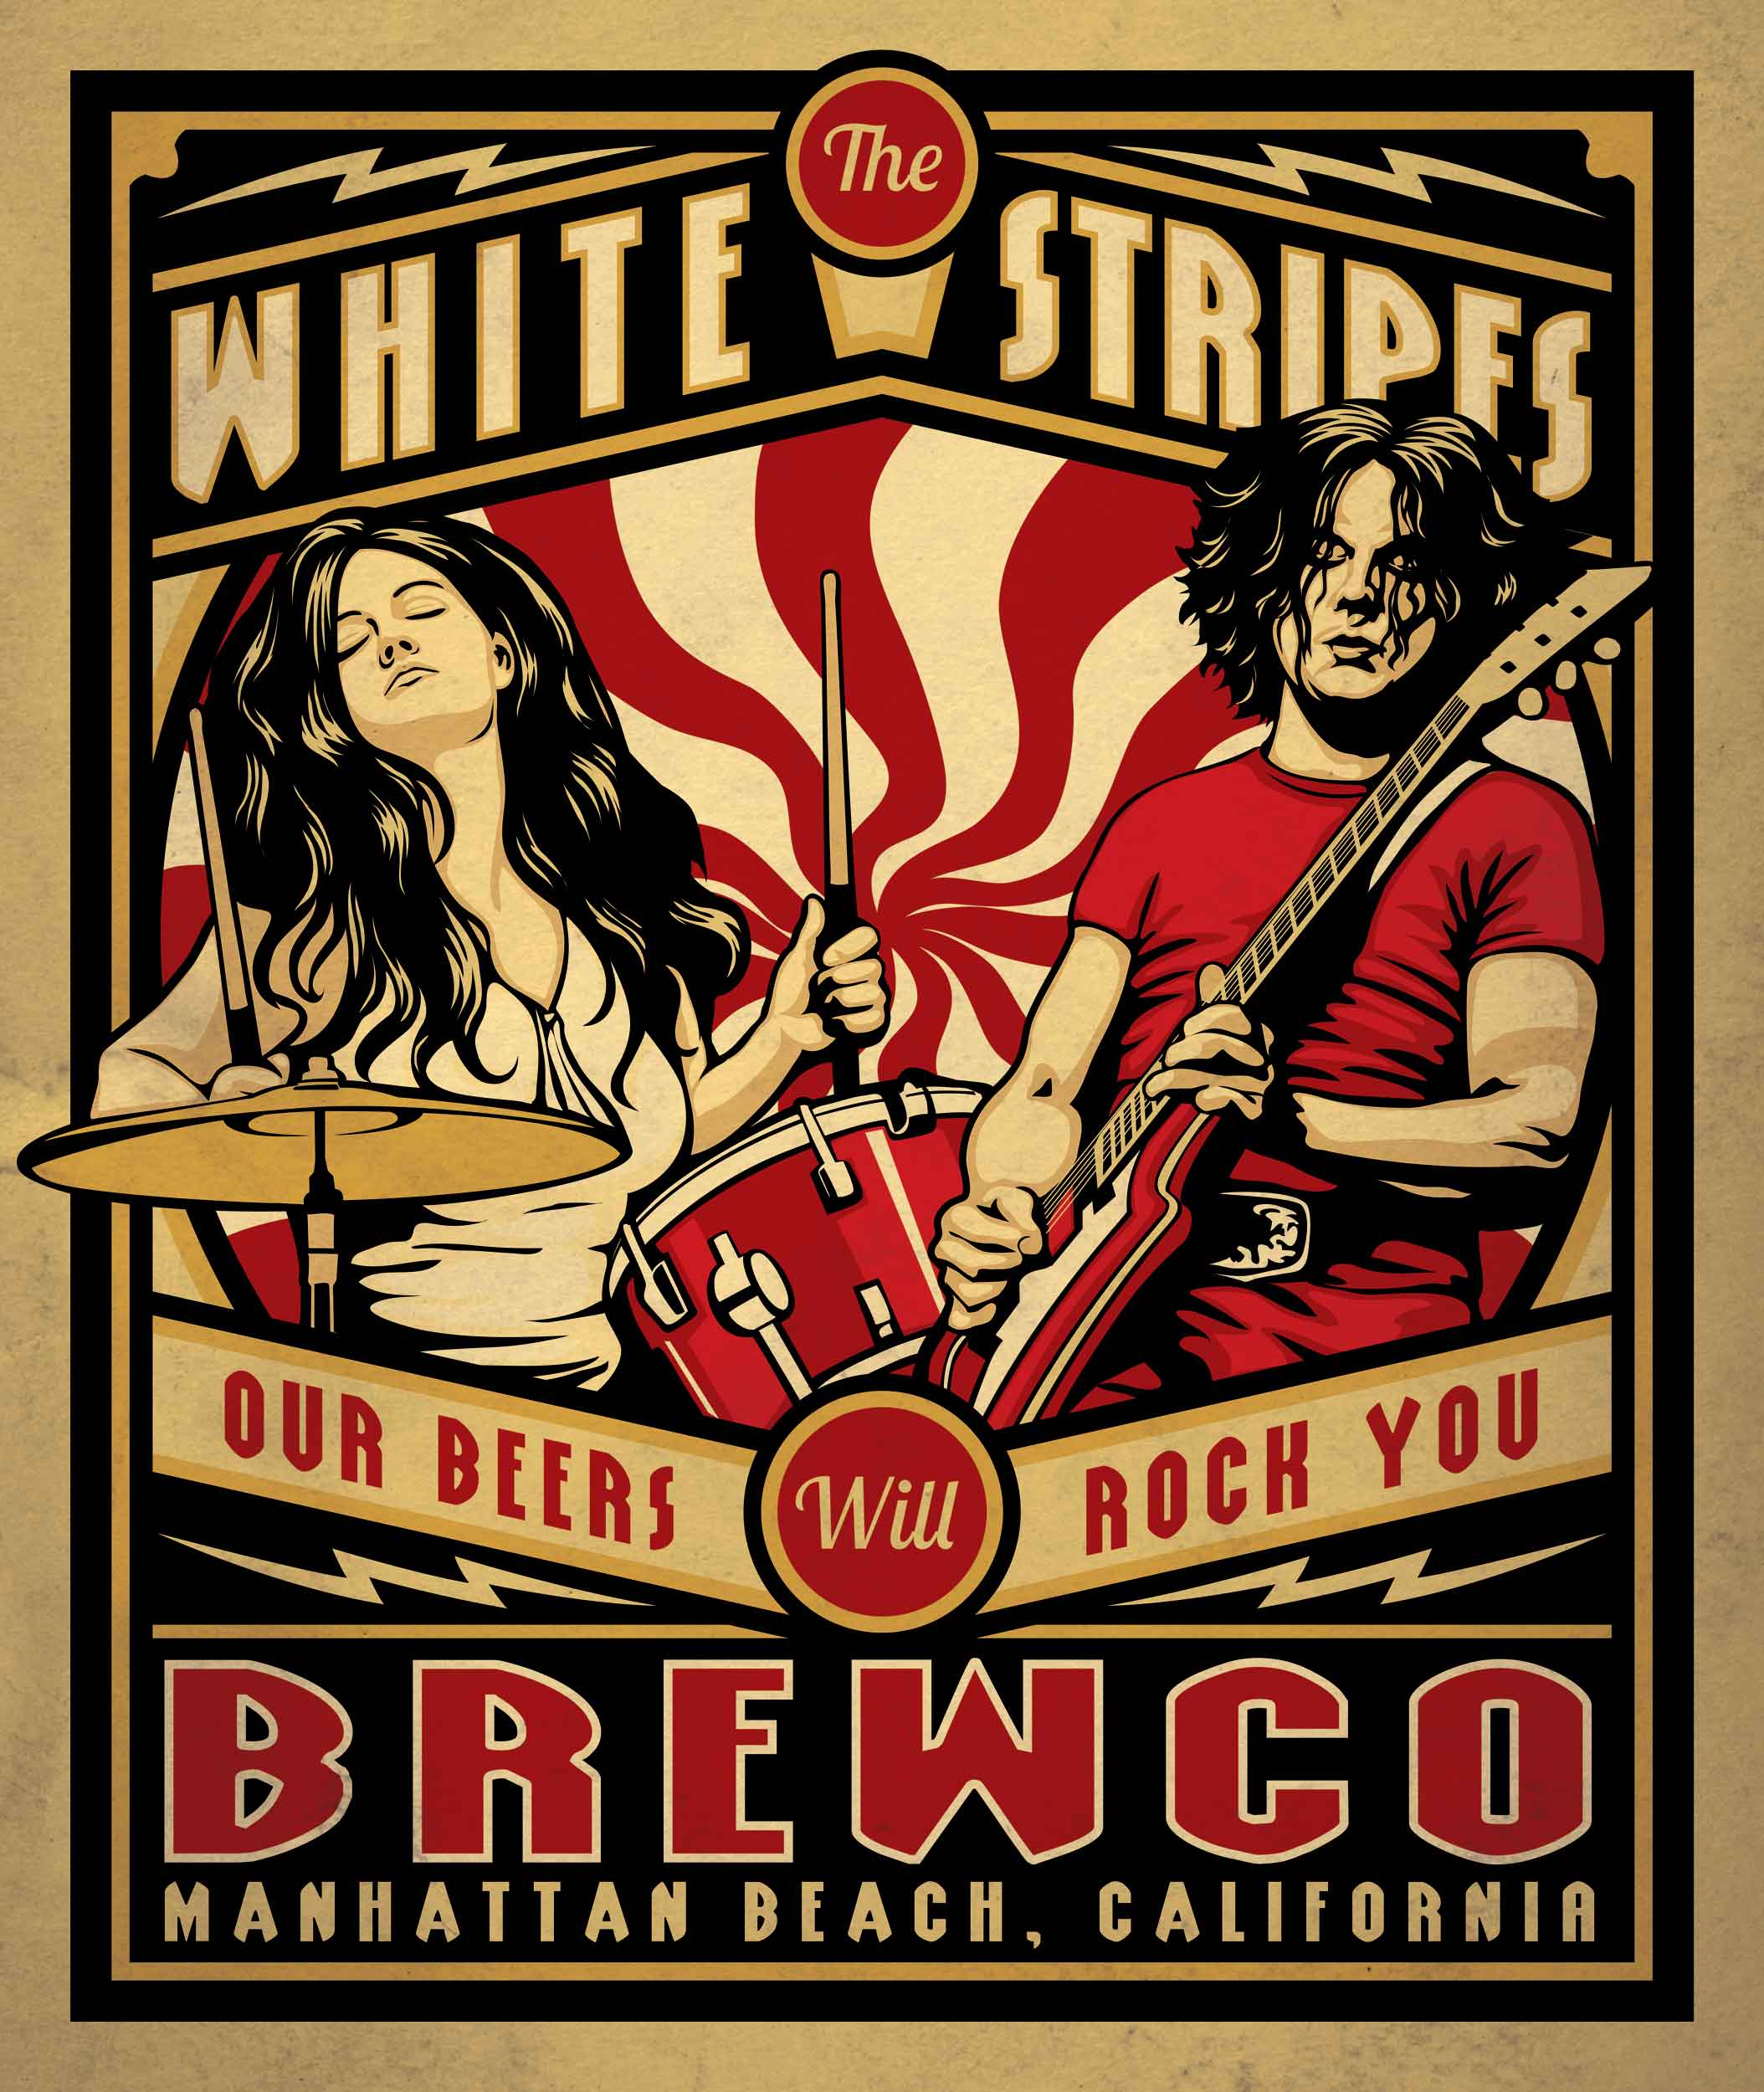 Brewco White Stripes poster